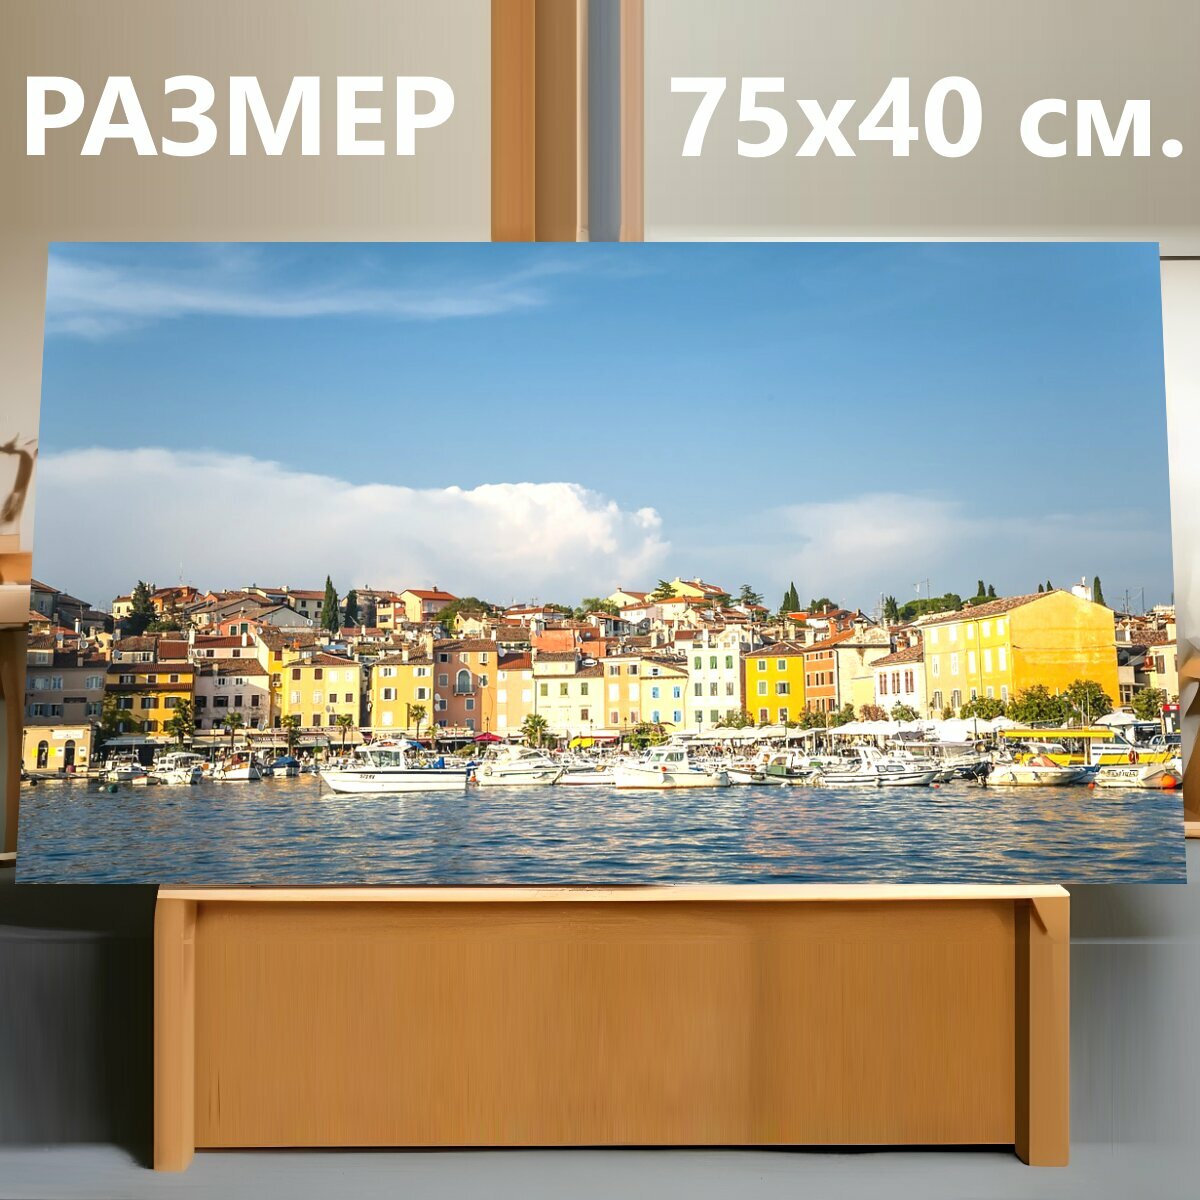 Картина на холсте "Морской берег, город, море" на подрамнике 75х40 см. для интерьера